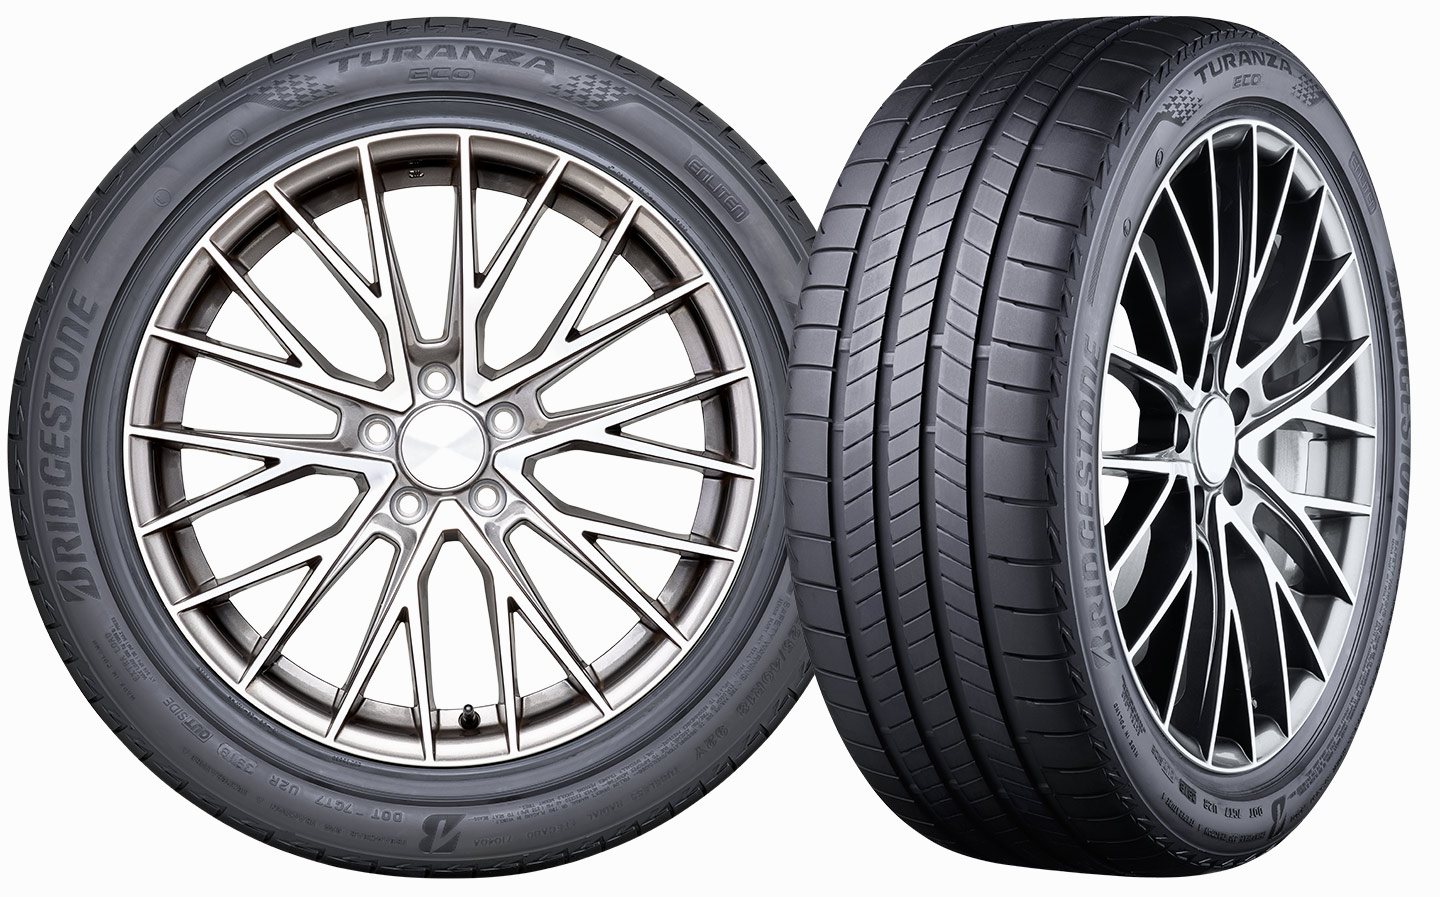 Bridgestone's new Enliten tyres improve electric car range, reduce petrol and diesel emissions